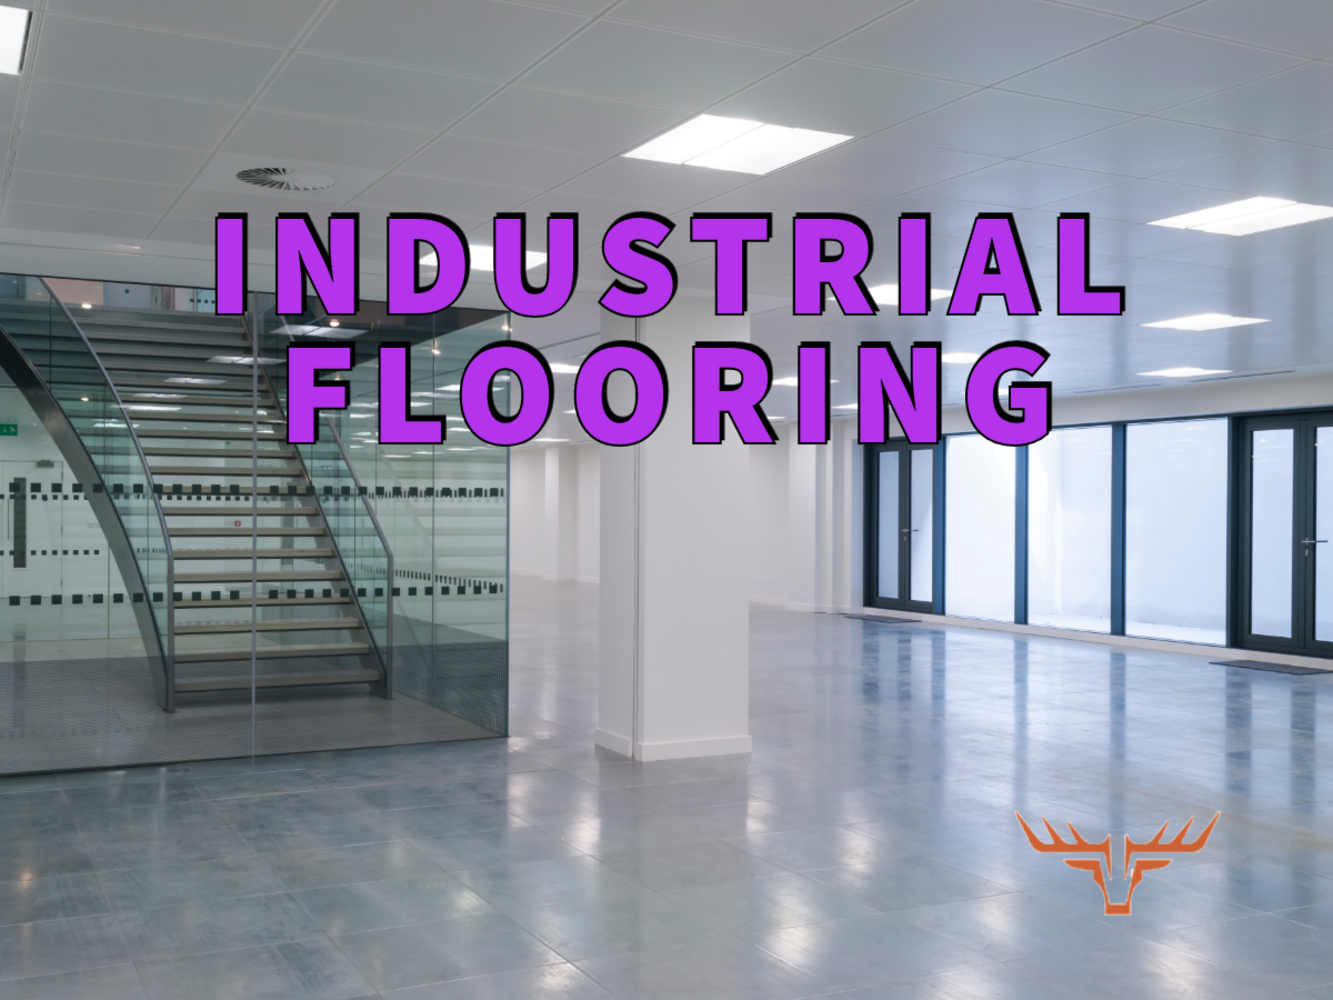 Industrial flooring written in purple over photo of empty first floor of an office building